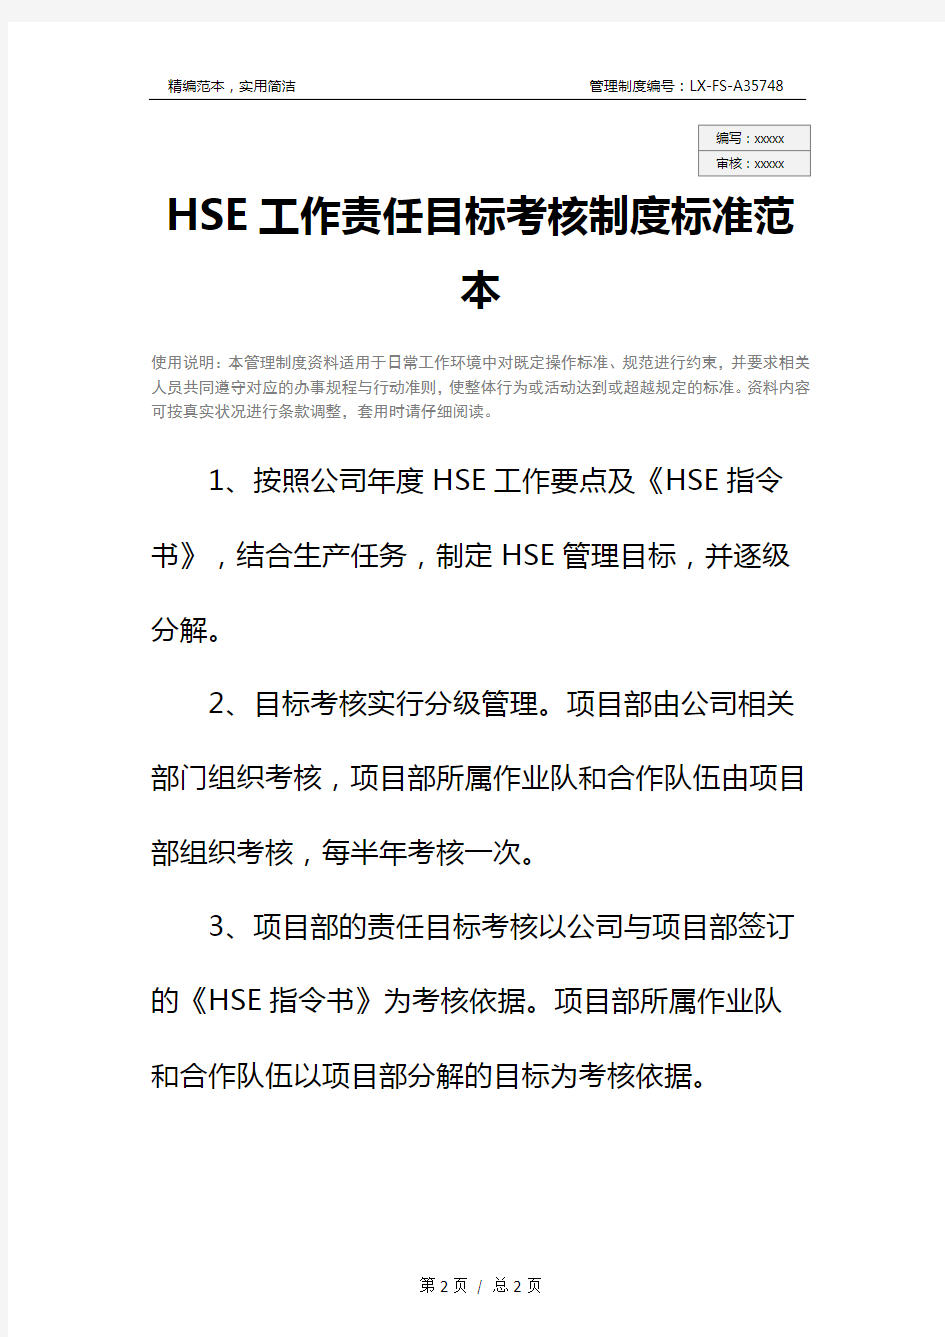 HSE工作责任目标考核制度标准范本